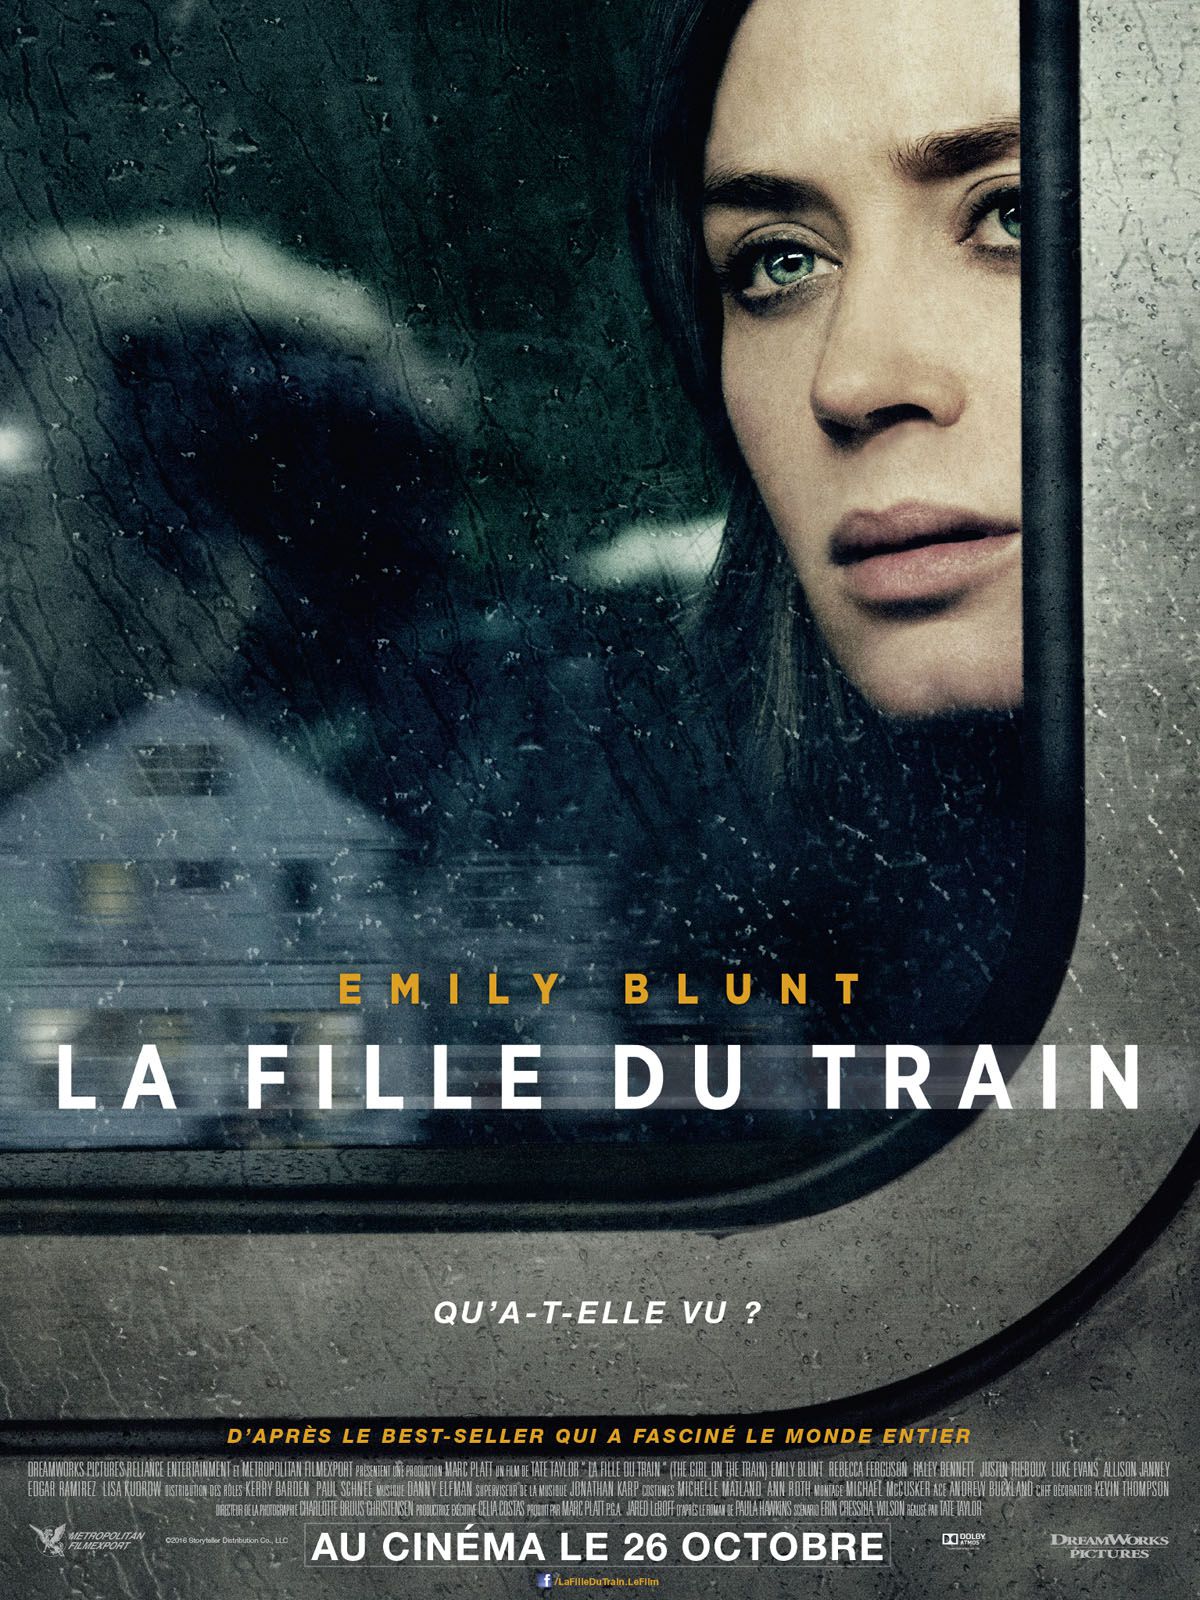 La Fille du train - Film (2016) streaming VF gratuit complet